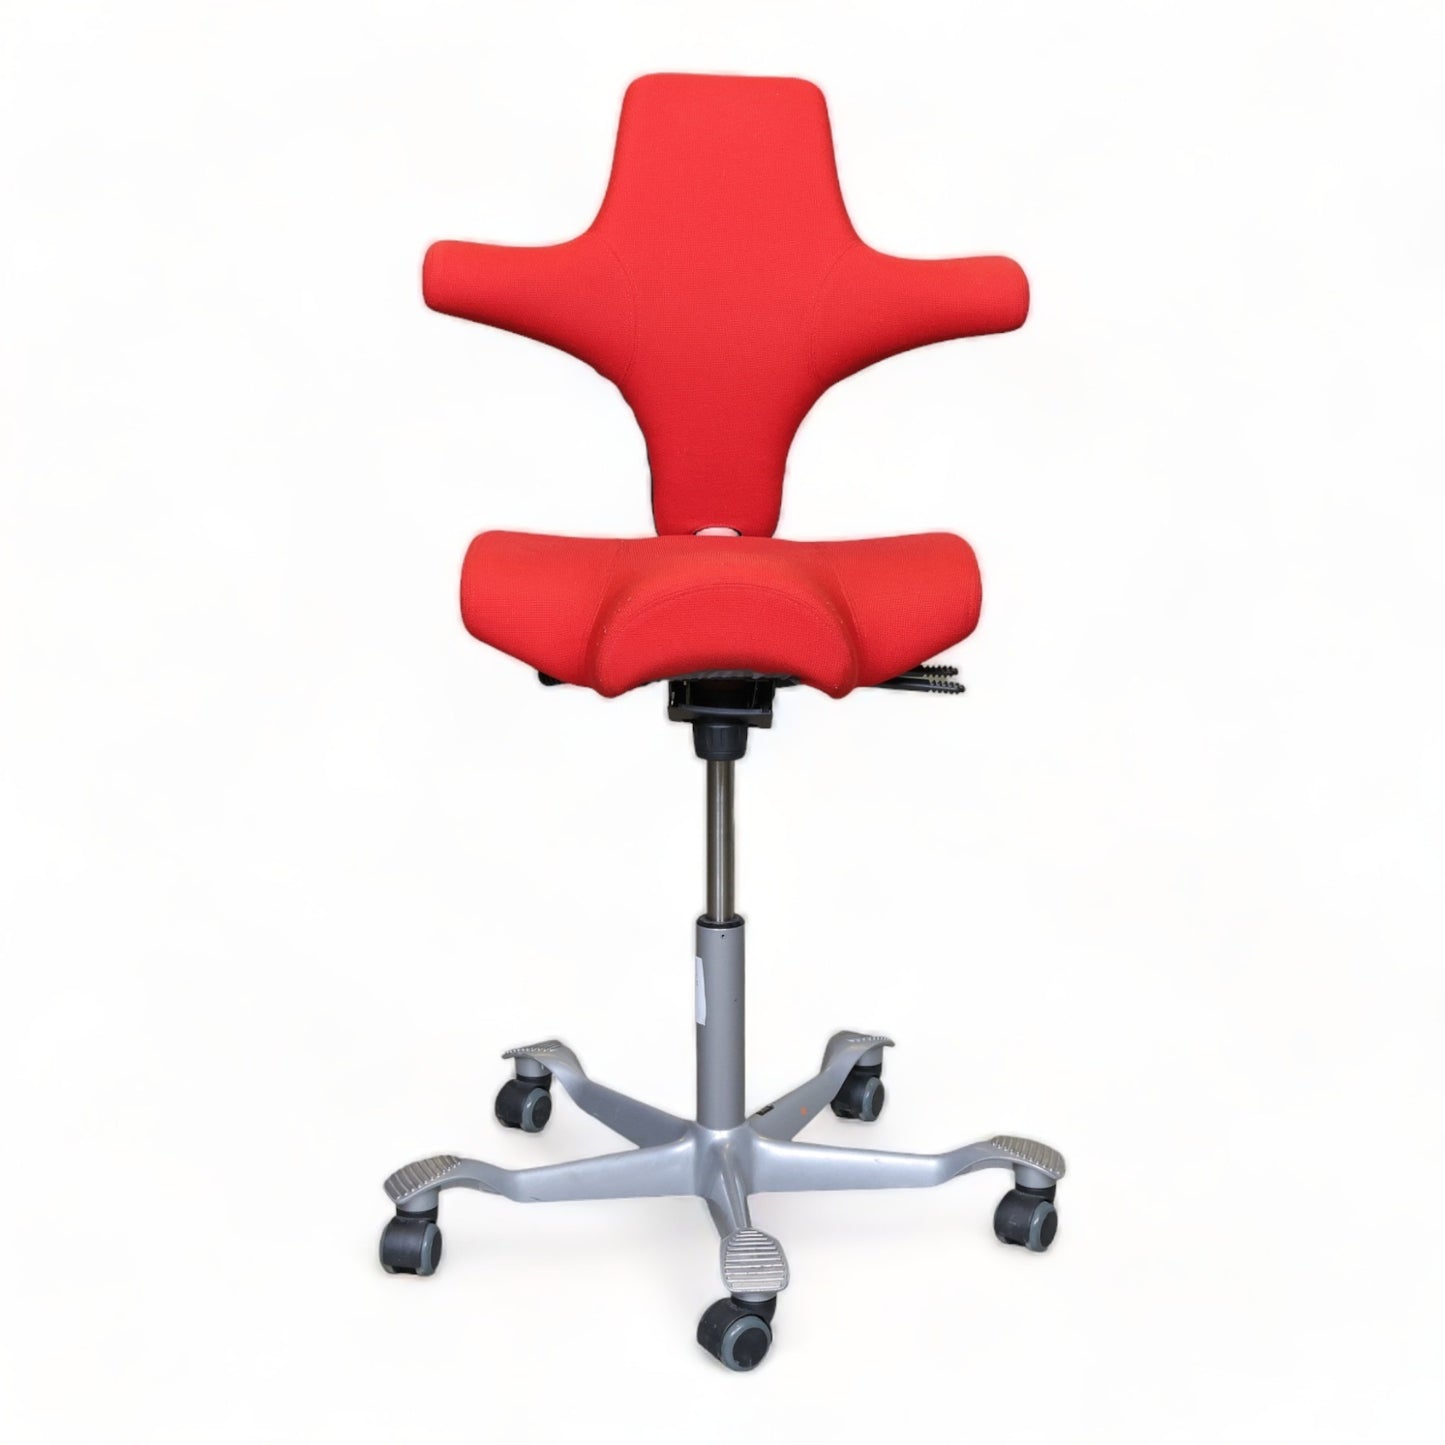 Nyrenset | Nyomtrukket Håg Capisco rød kontorstol med sadelsete